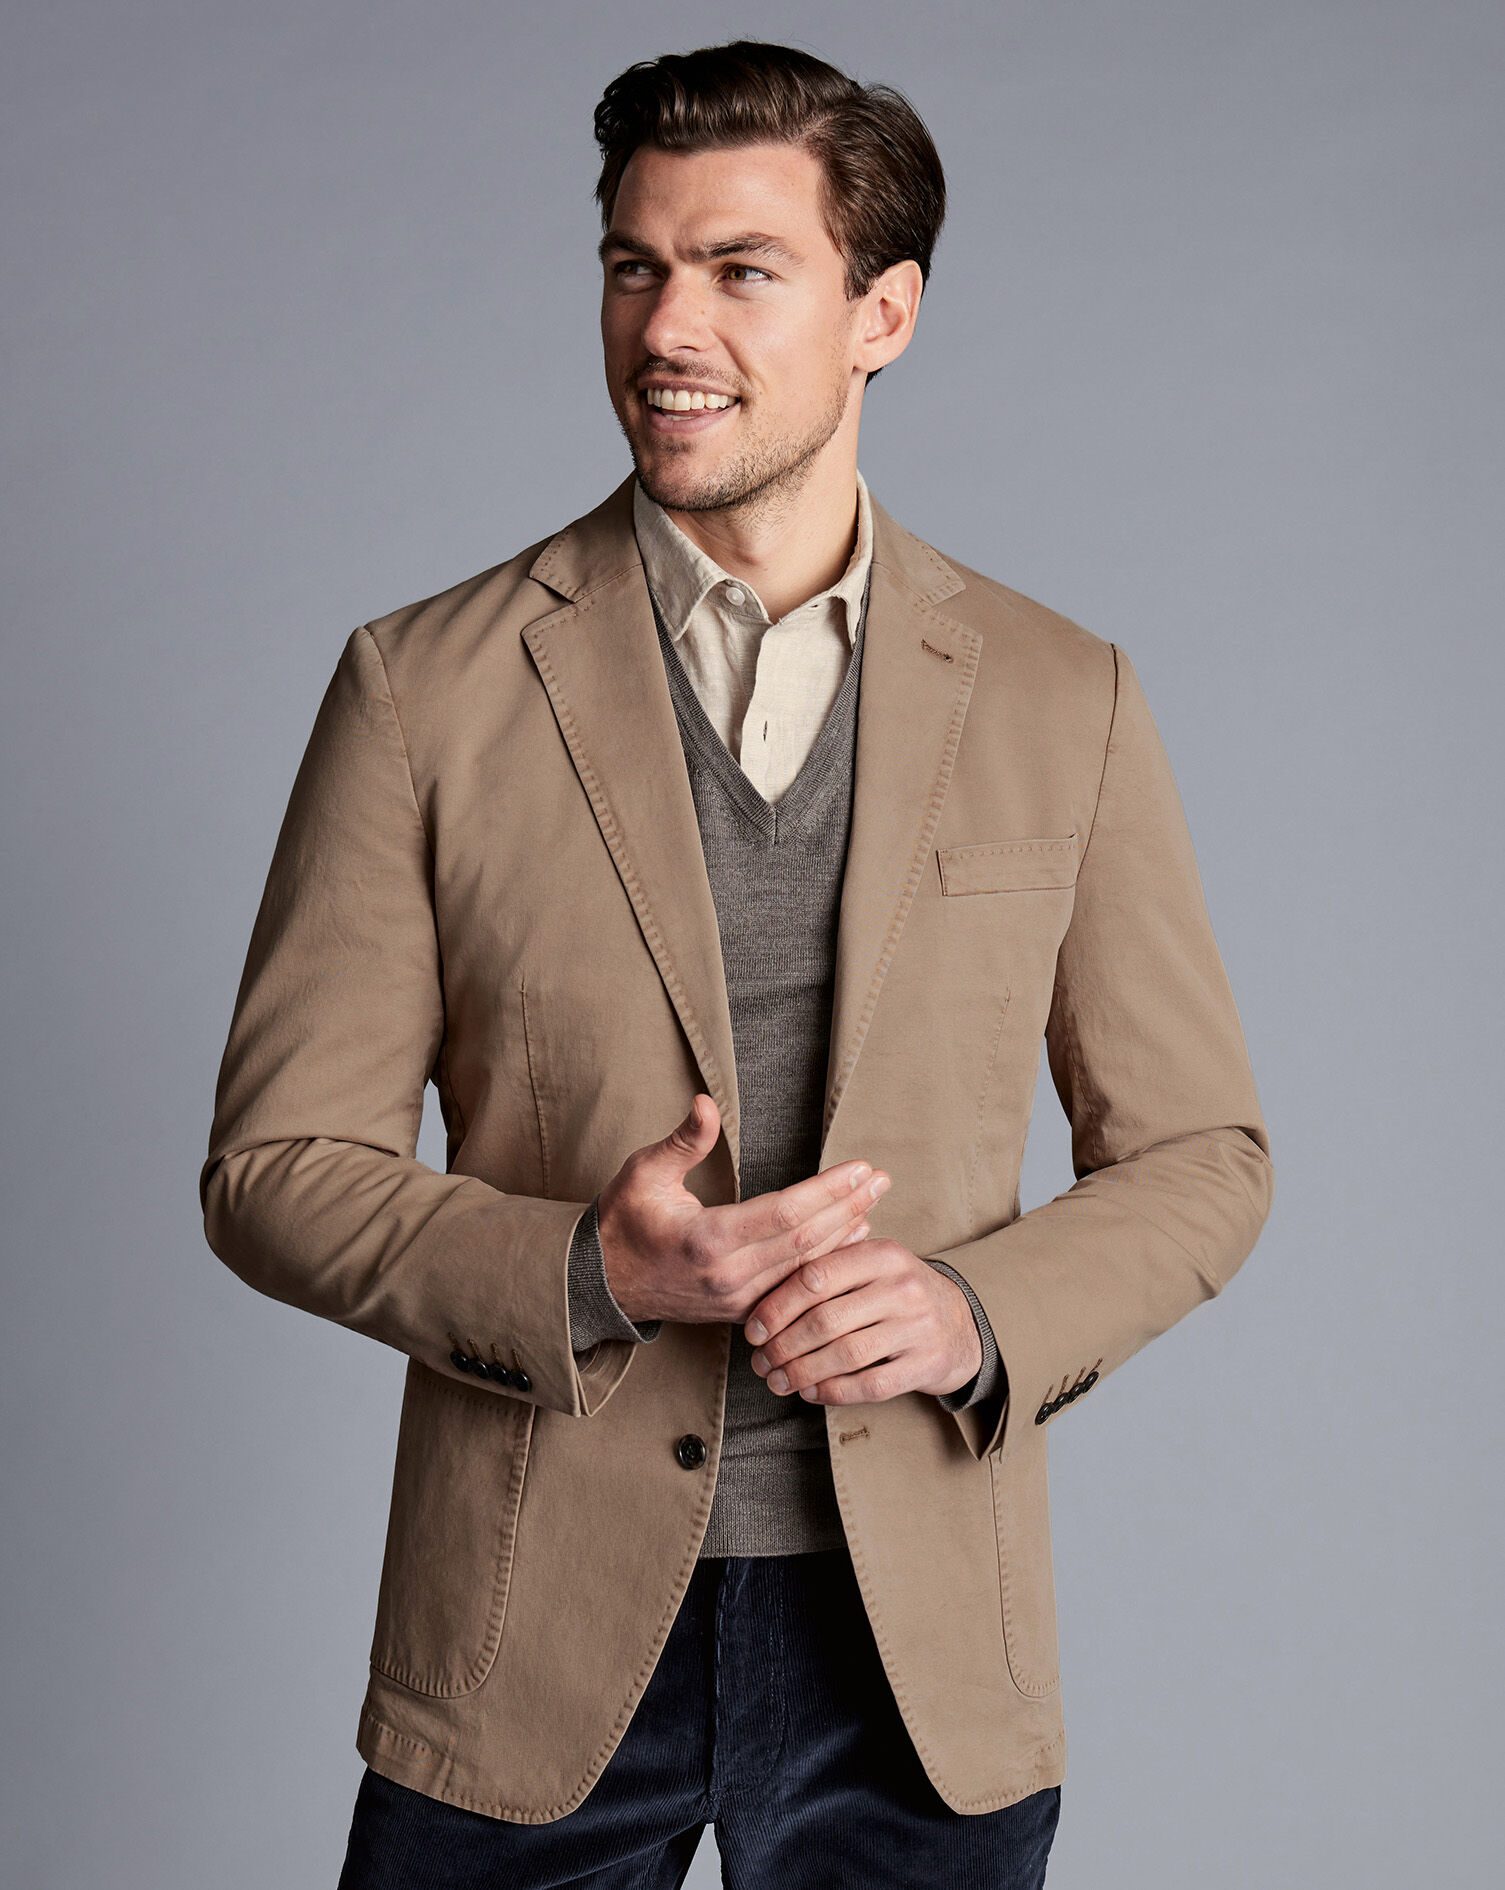 Brown Blazer Matching Shirt and Pants  Brown Blazer Combination   TiptopGents